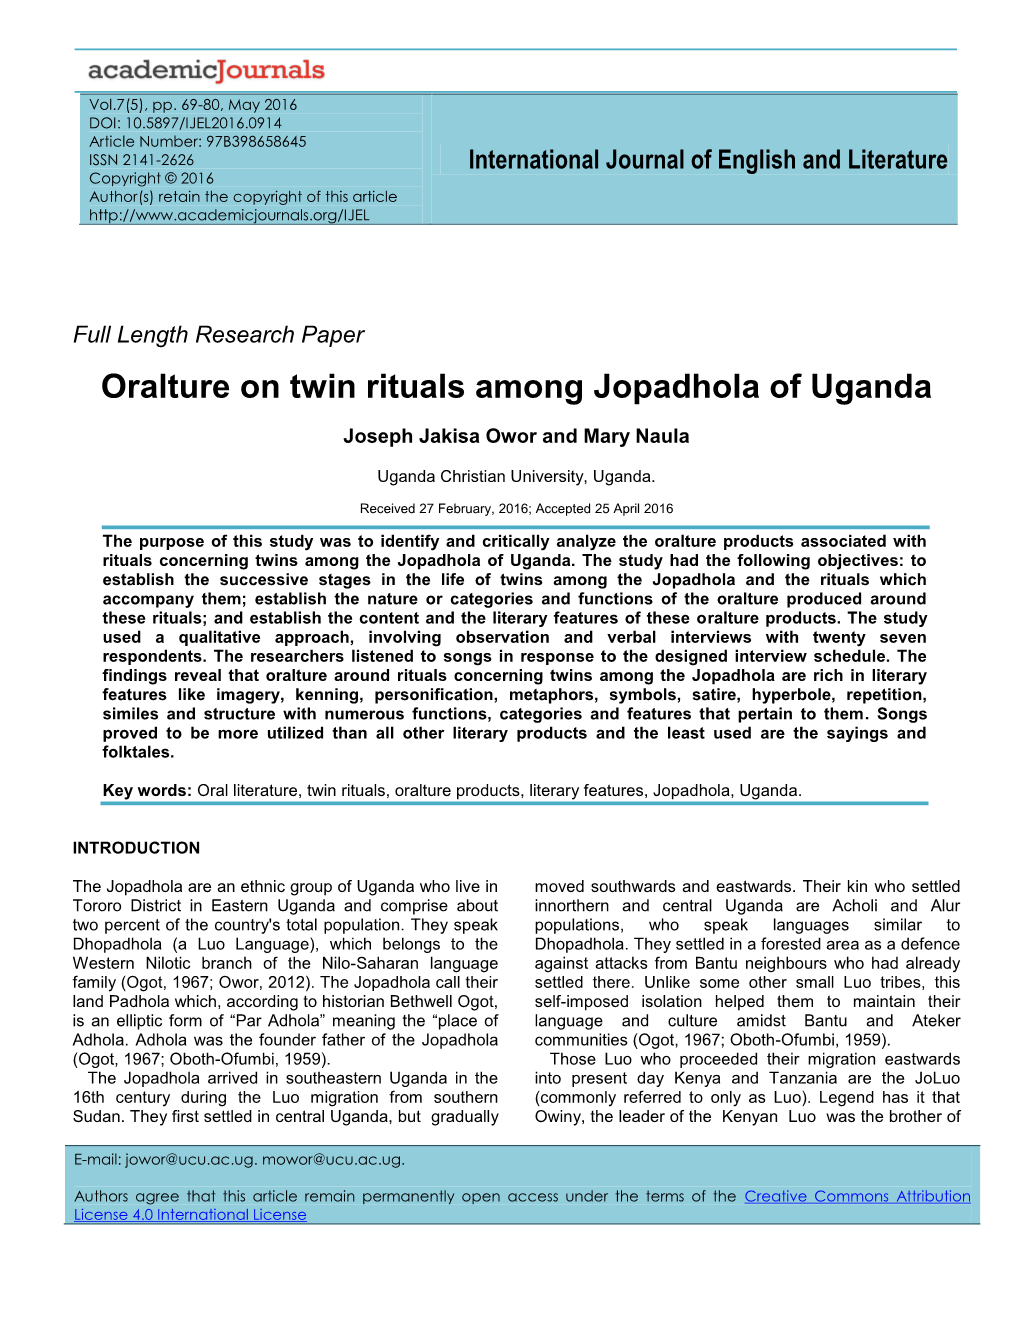 Oralture on Twin Rituals Among Jopadhola of Uganda